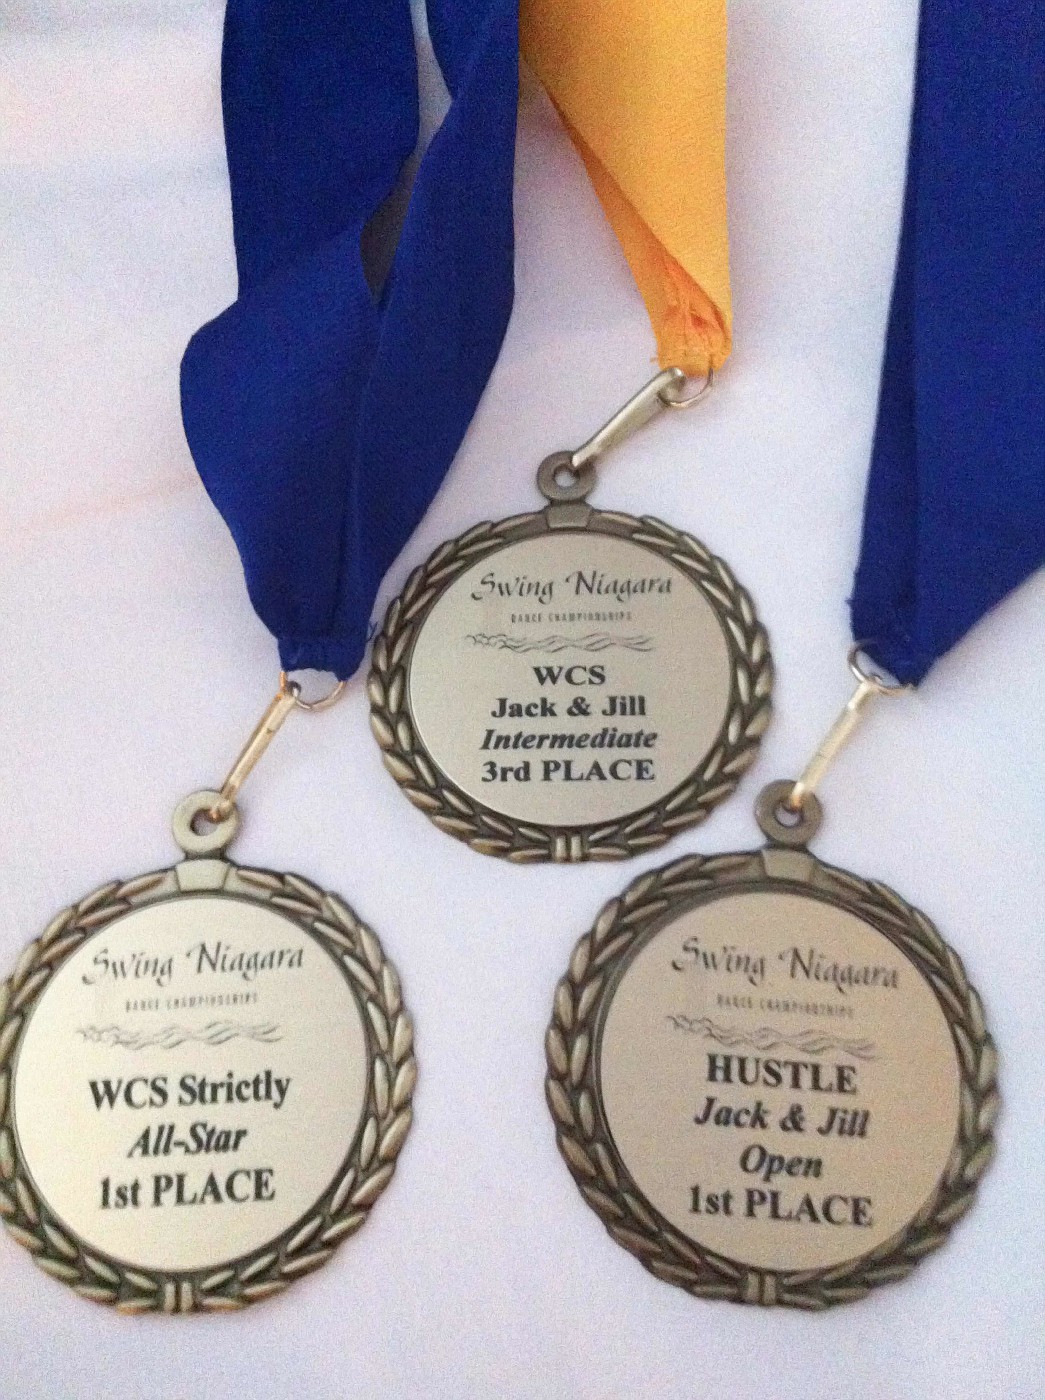 Anna Novoa's medals from Swing Niagara